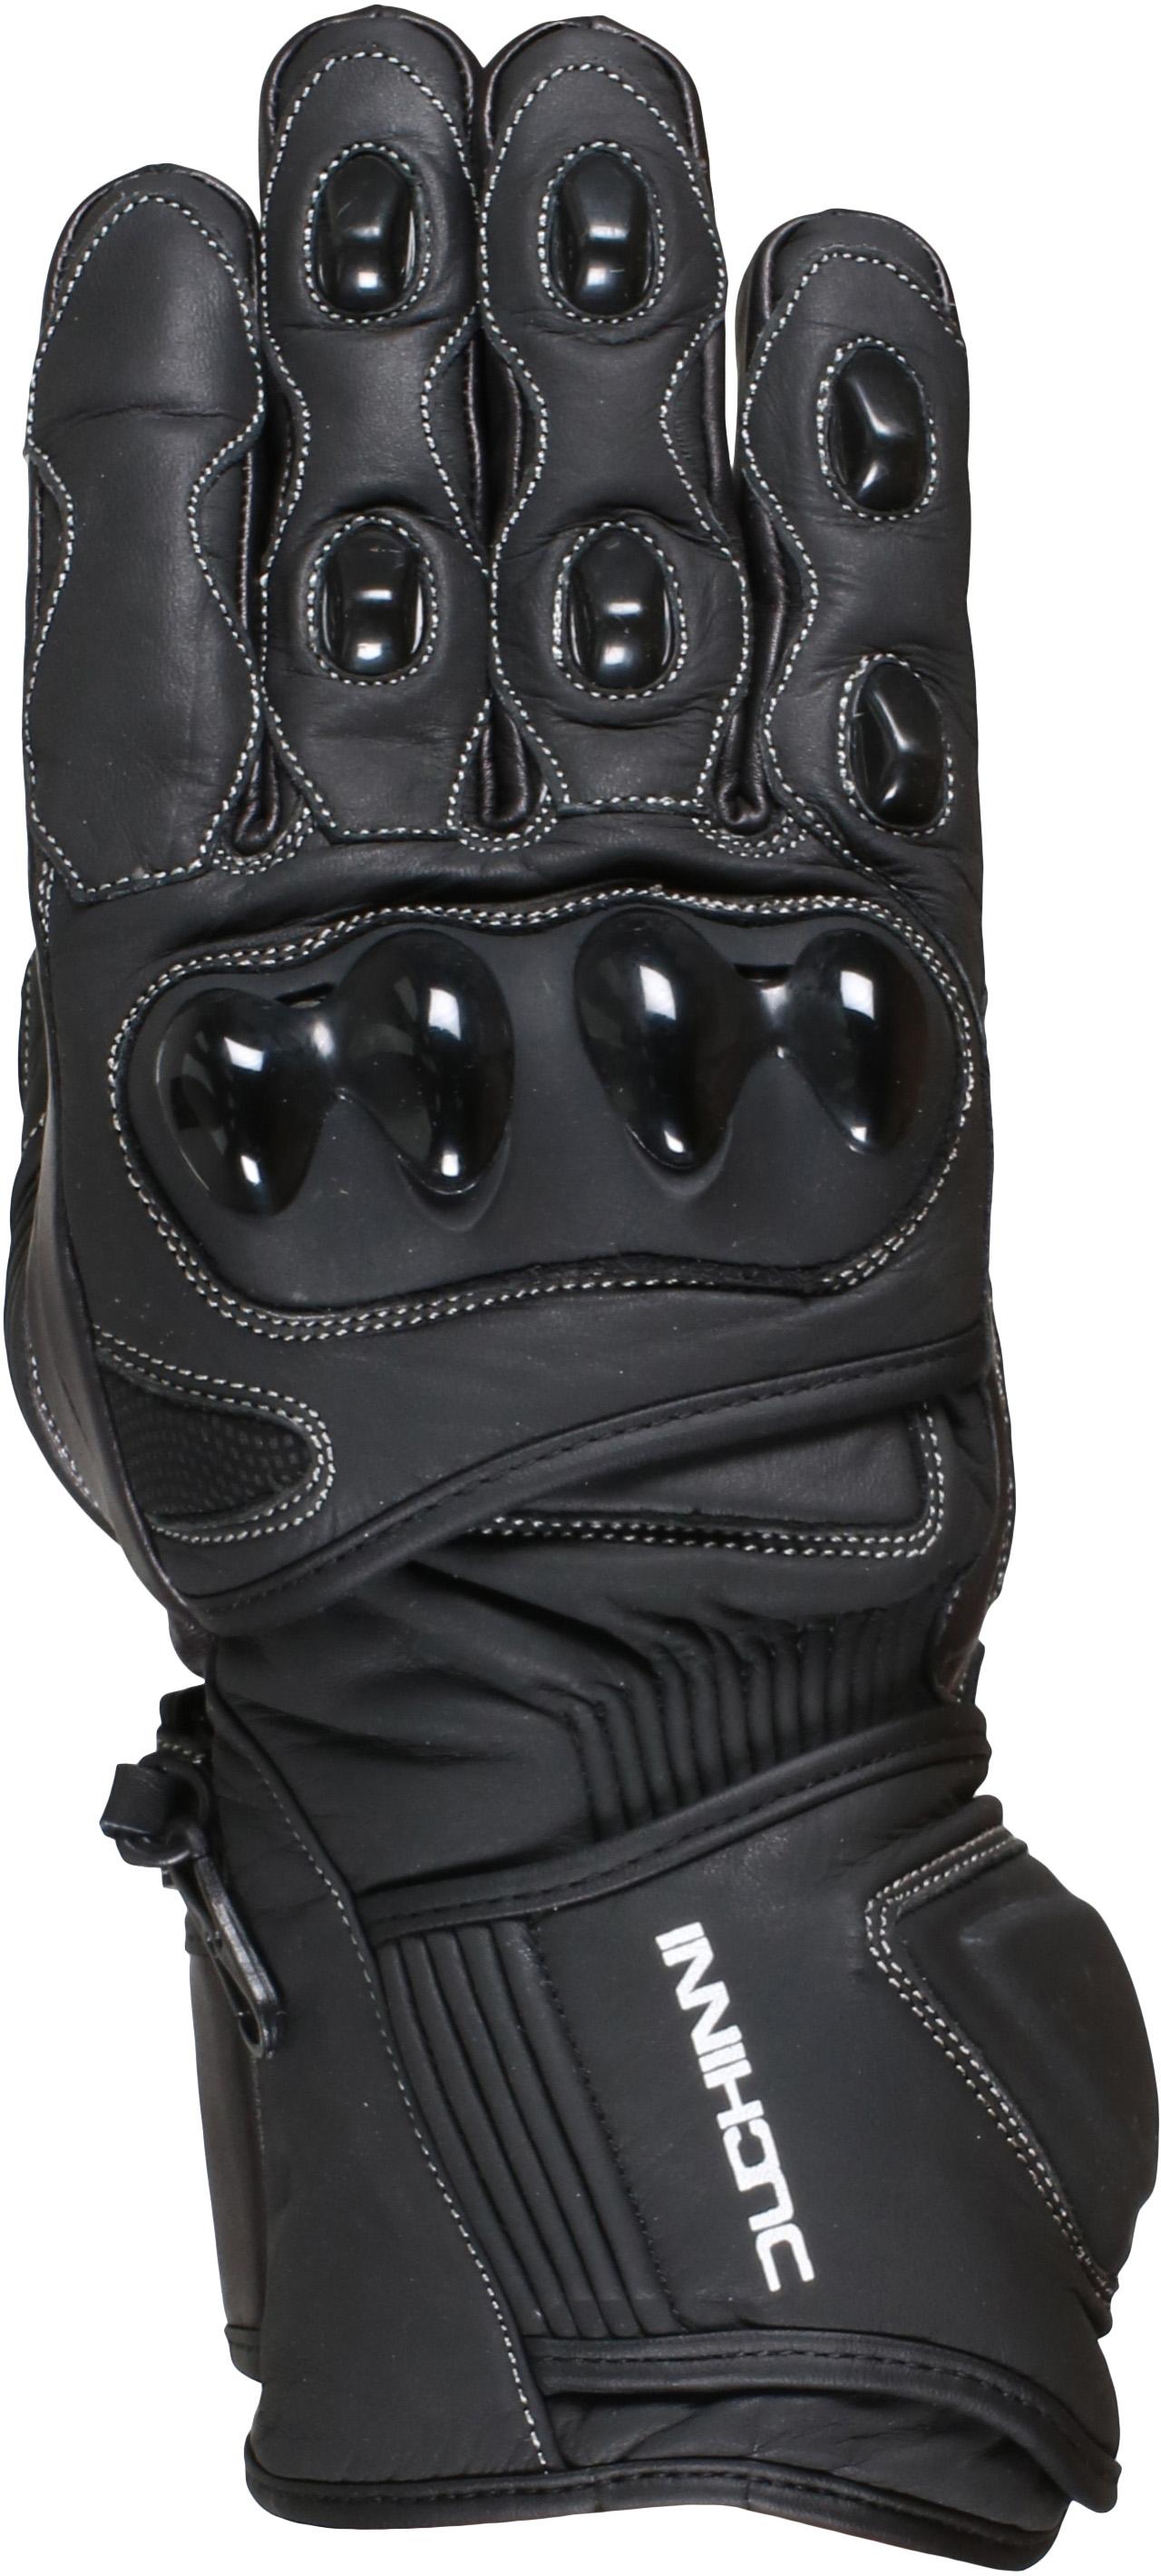 Duchinni Spartan Motorcycle Gloves - Black, L